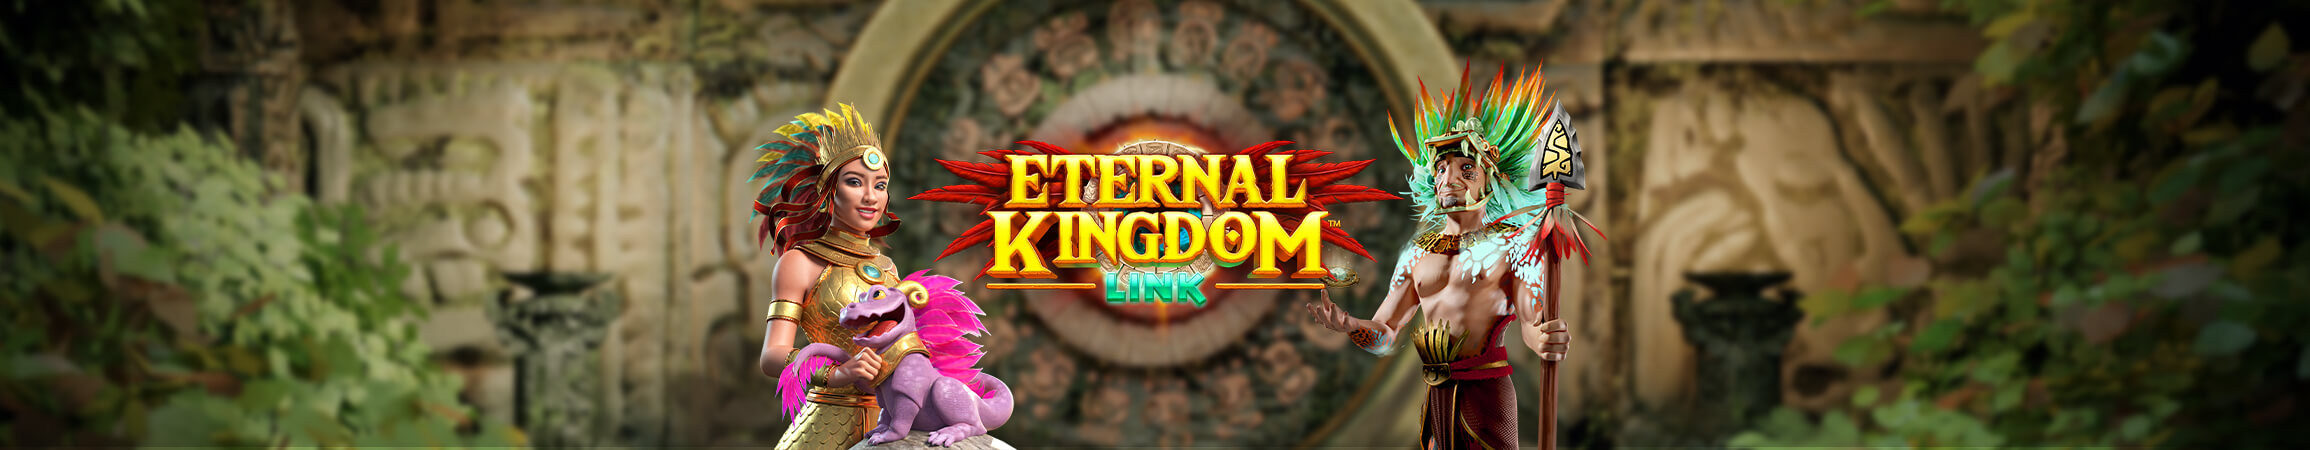 Eternal Kingdom Link: 6 thrilling FBM® slots bring adrenaline to casino operators